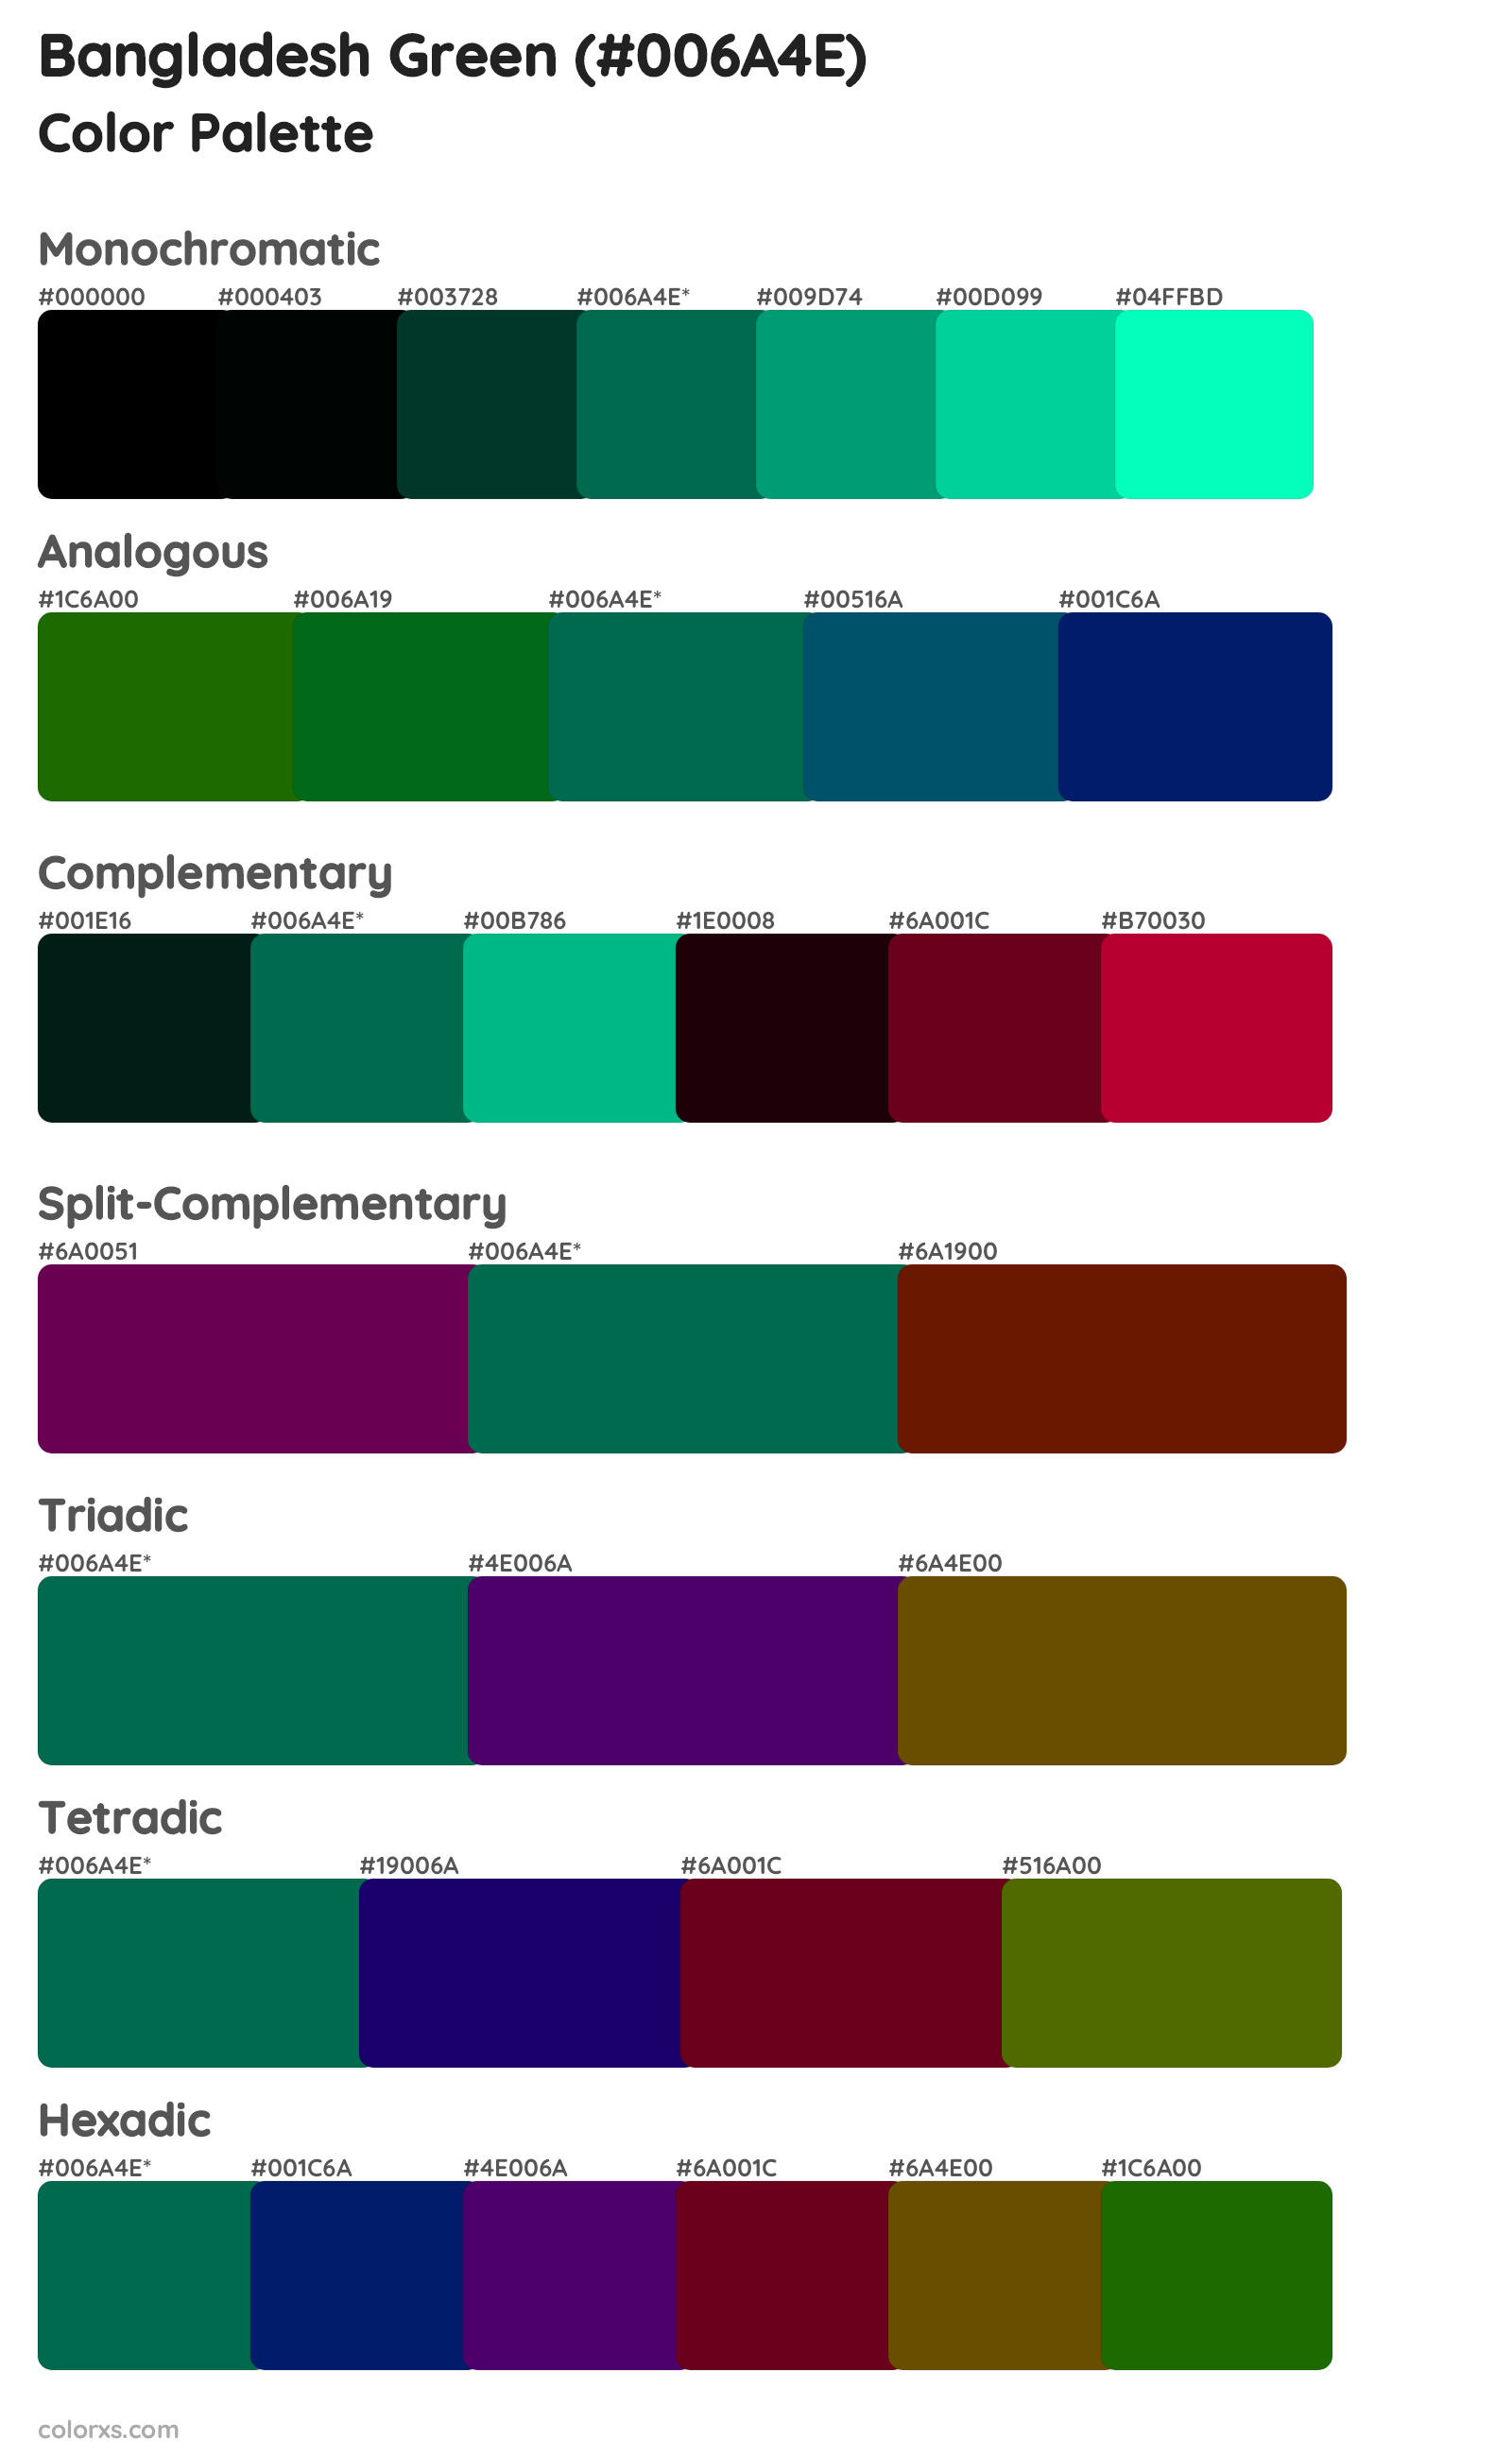 Bangladesh Green Color Scheme Palettes